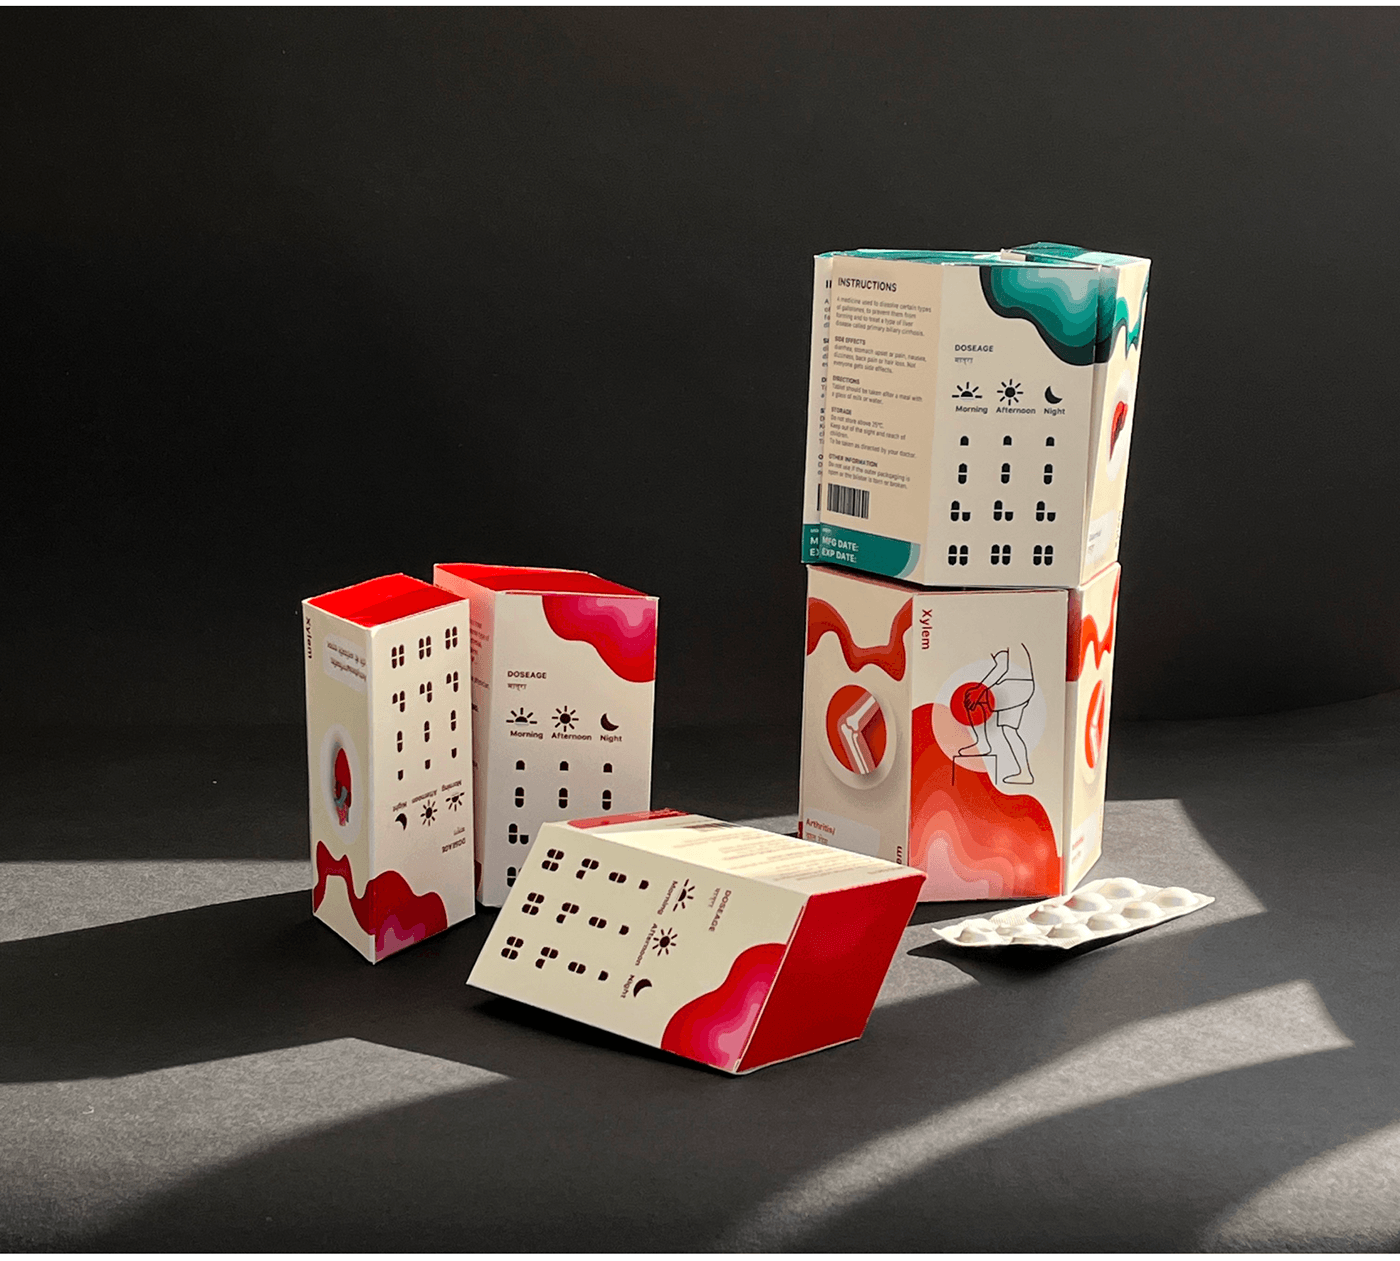 Packaging pharmacy medical packaging design visual identity adobe illustrator design